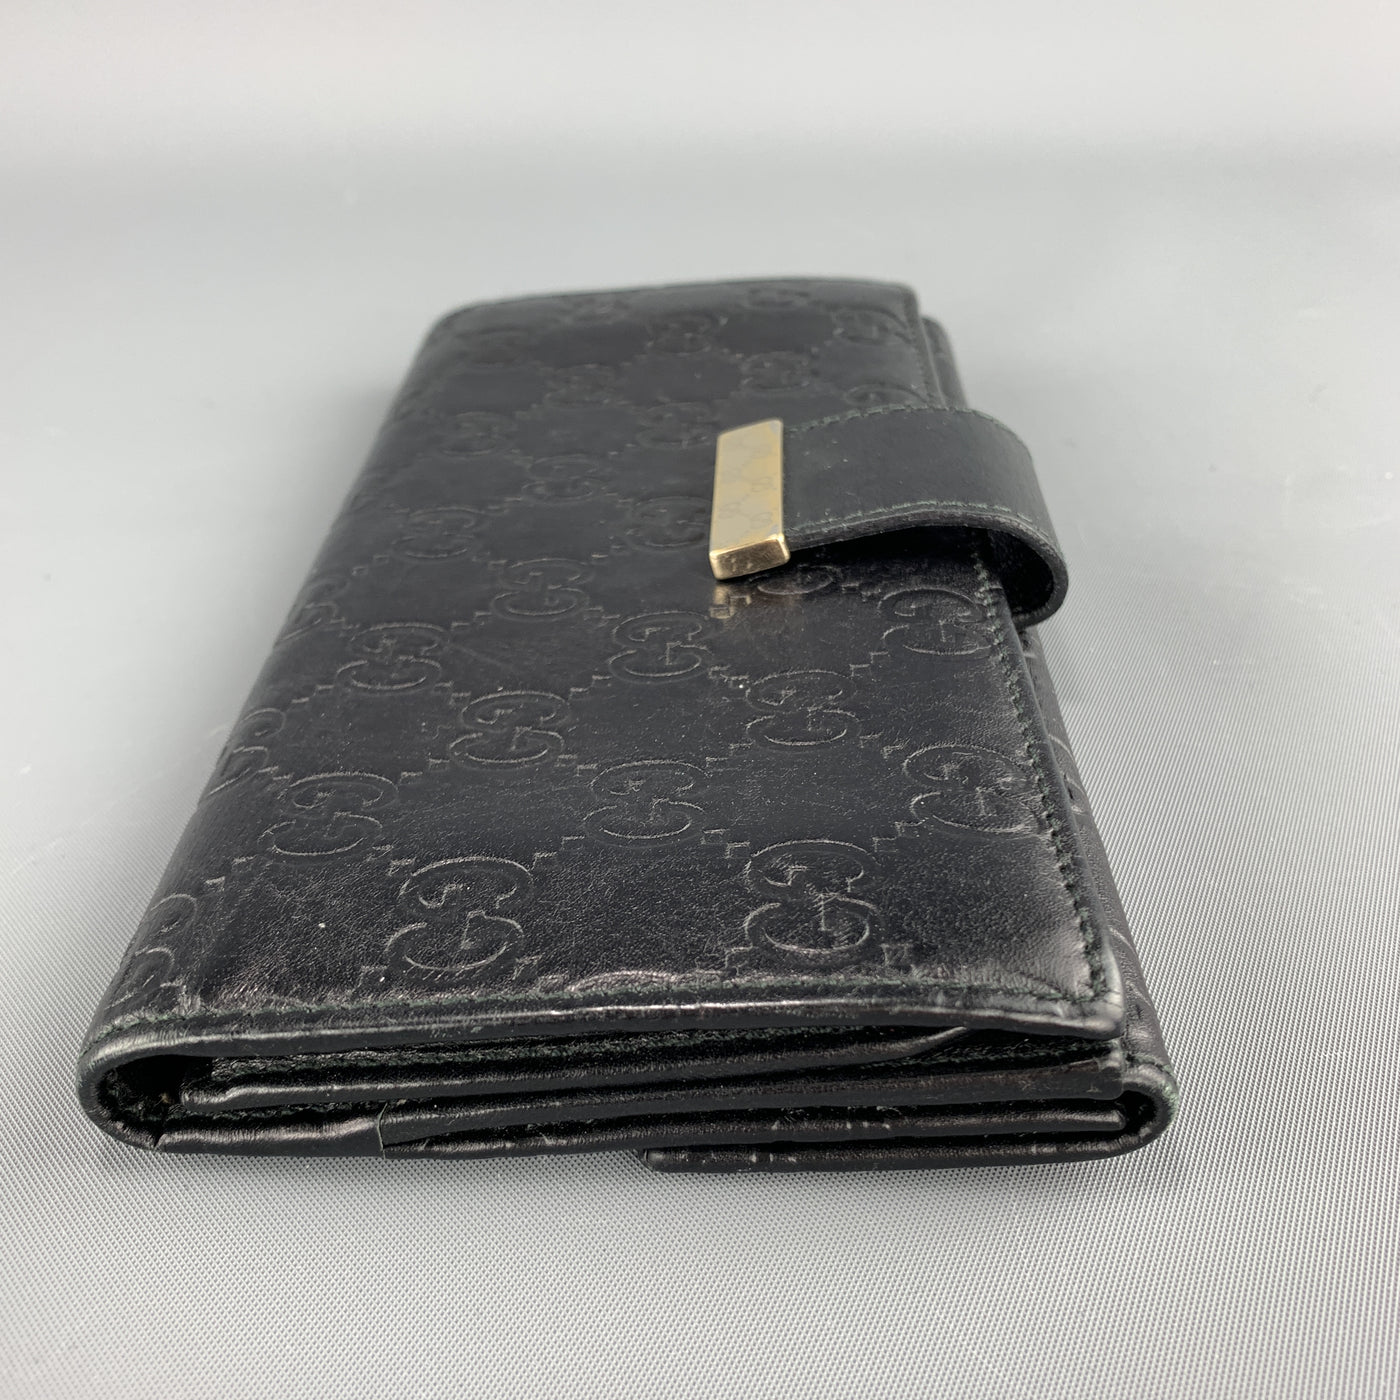 GUCCI Monogram Embossed Black Leather Checkbook Wallet